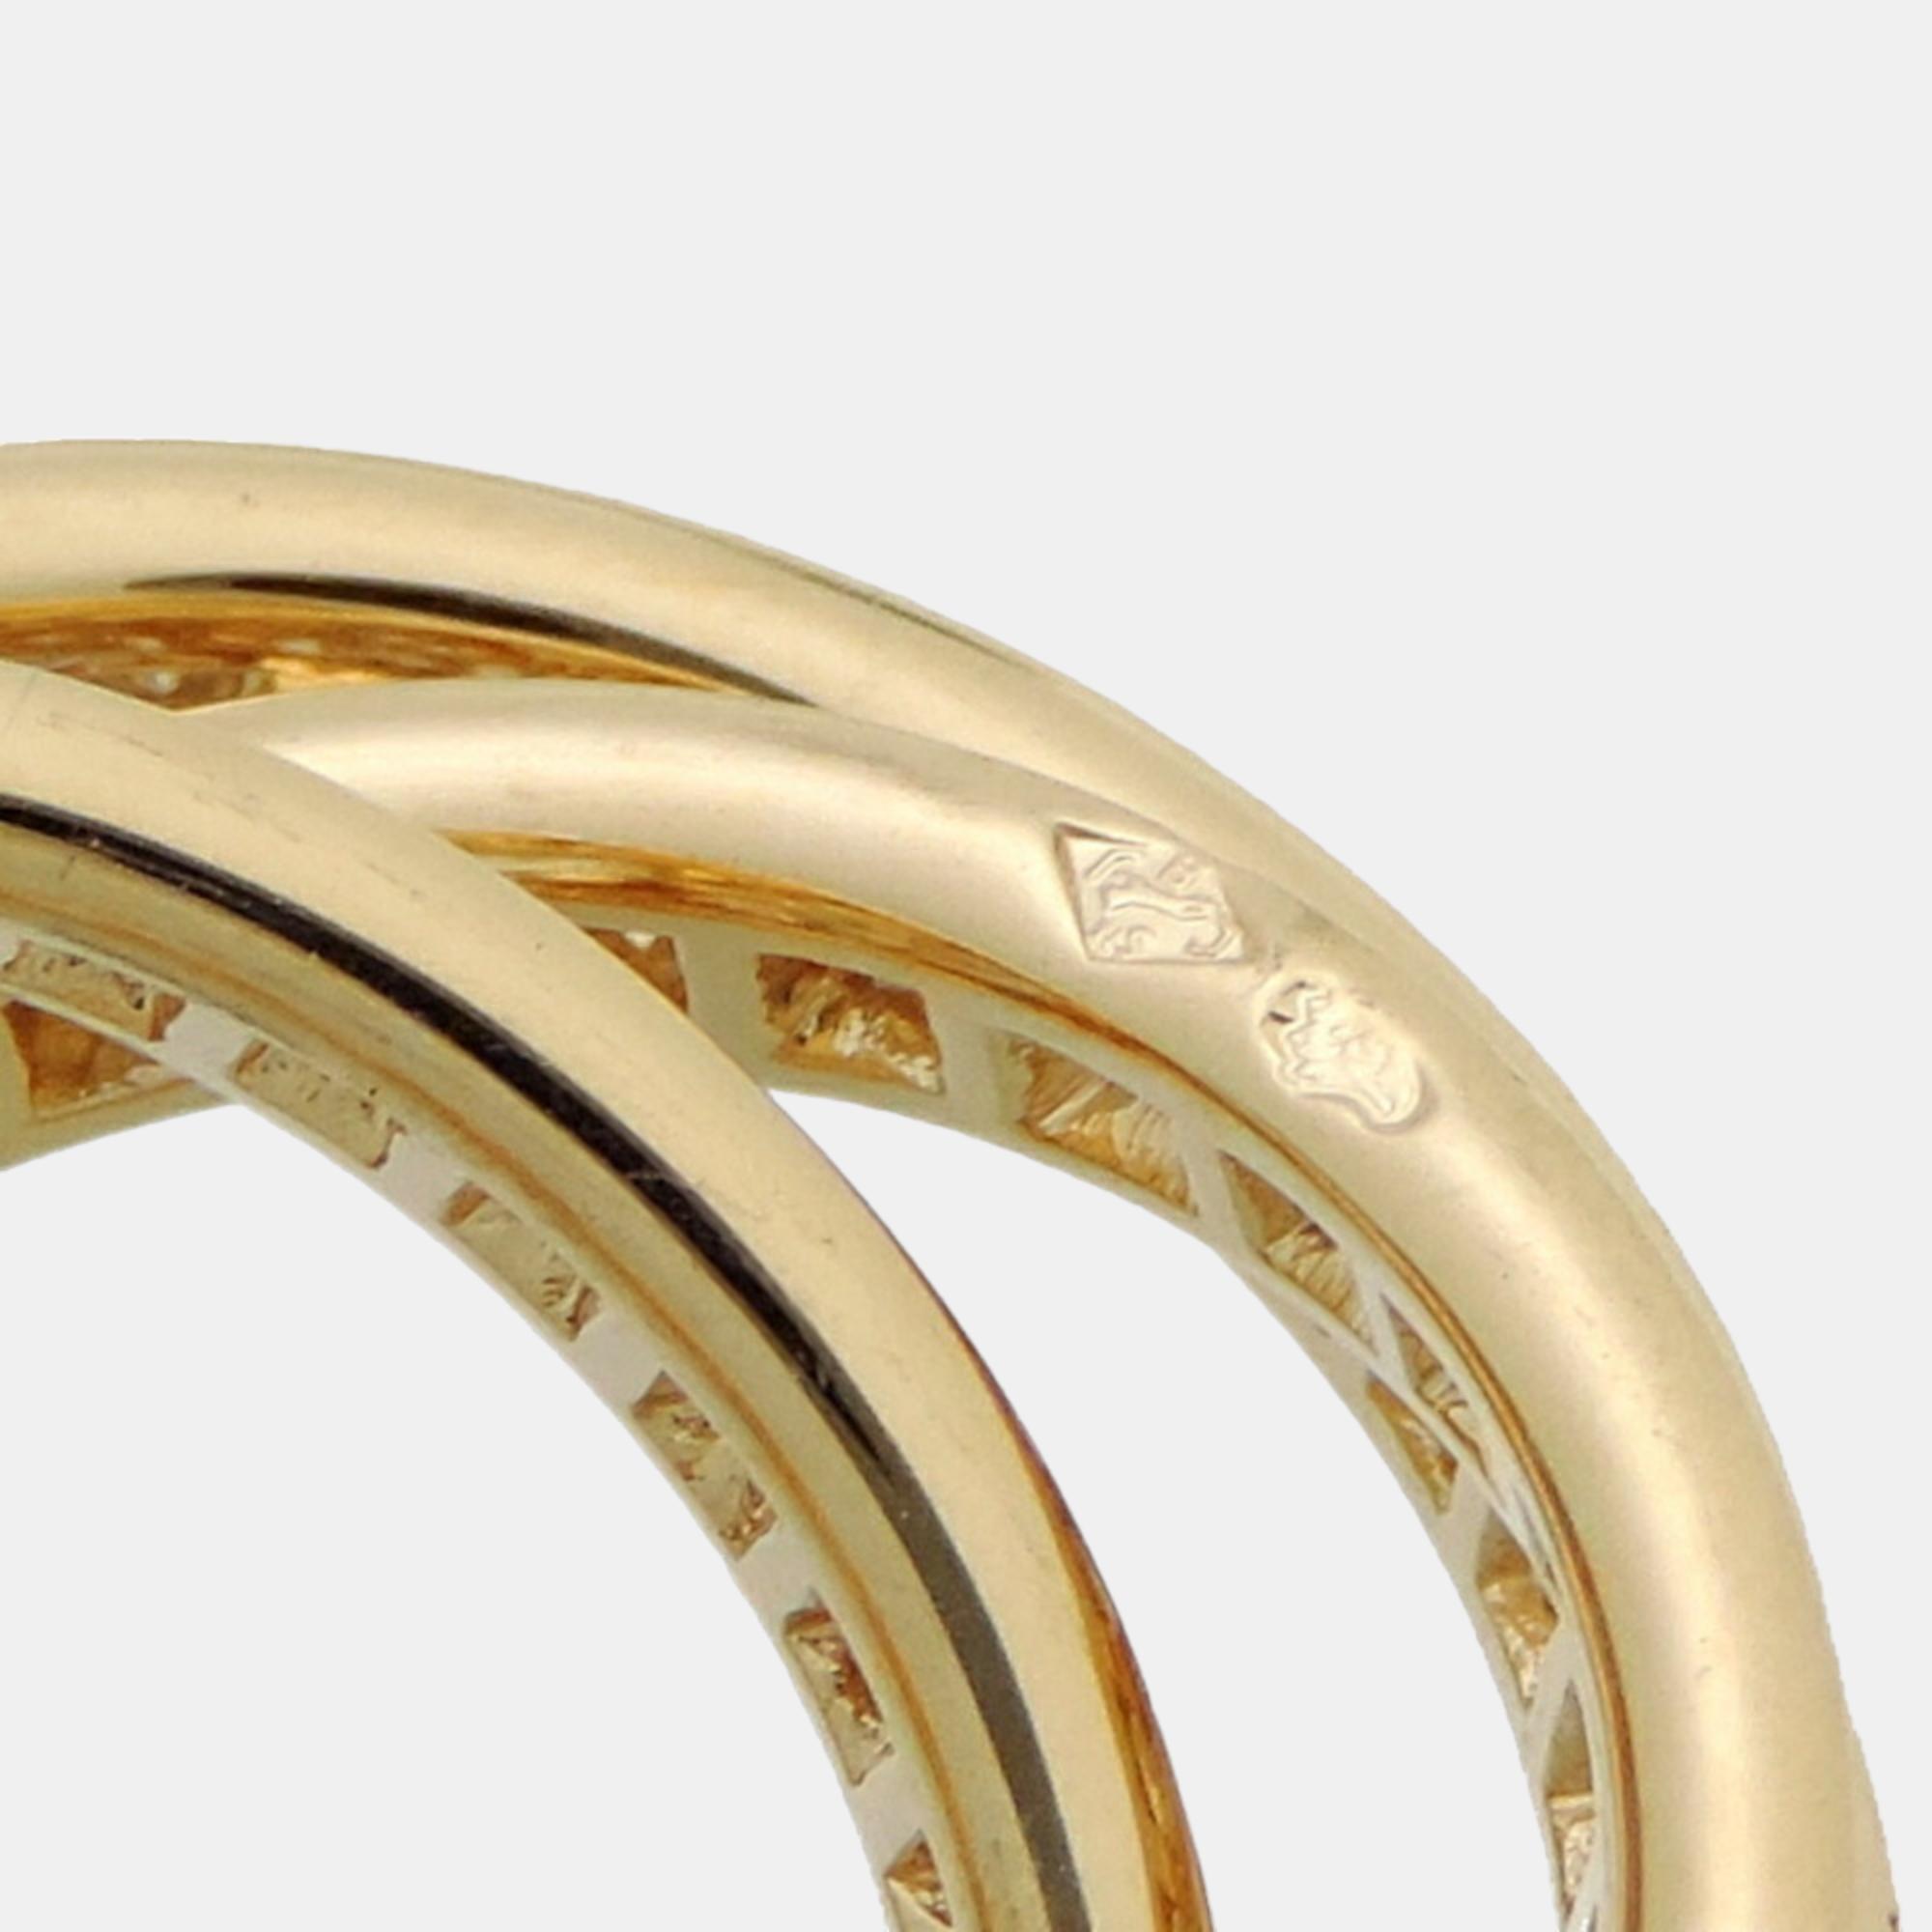 Cartier Vintage Trinity 18K Yellow Gold Diamond Ring EU 52